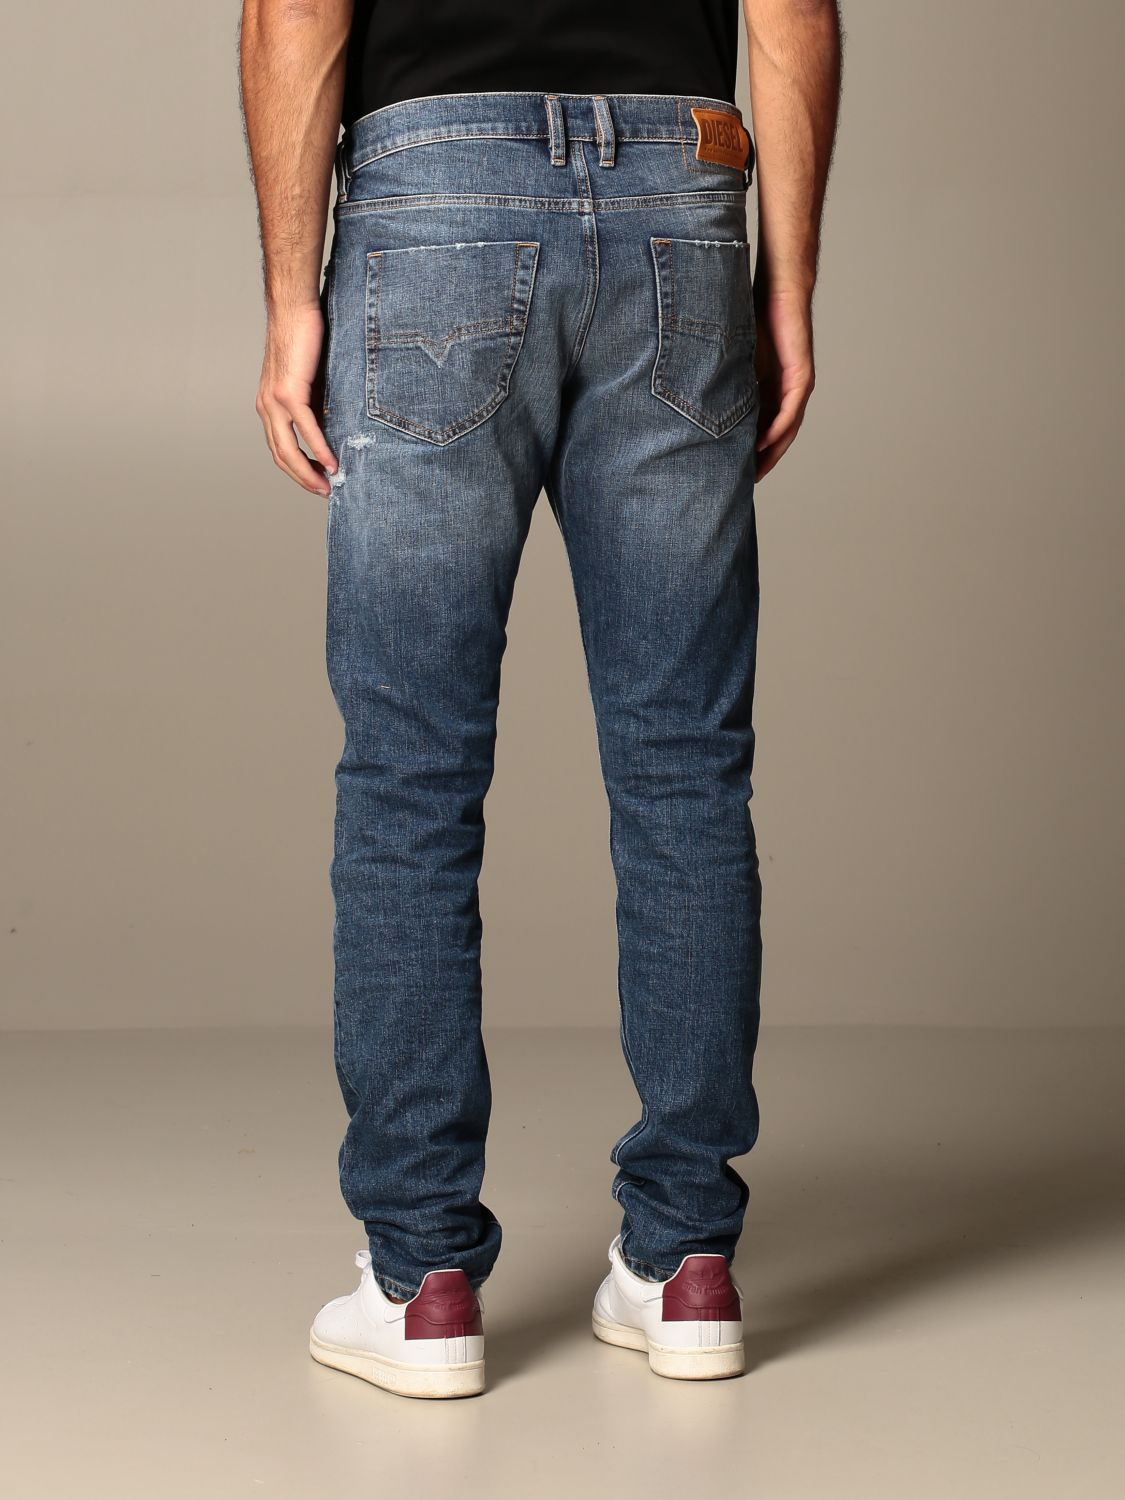 Diesel Outlet: Tepphar jeans in used carrot fit denim | Jeans Diesel ...